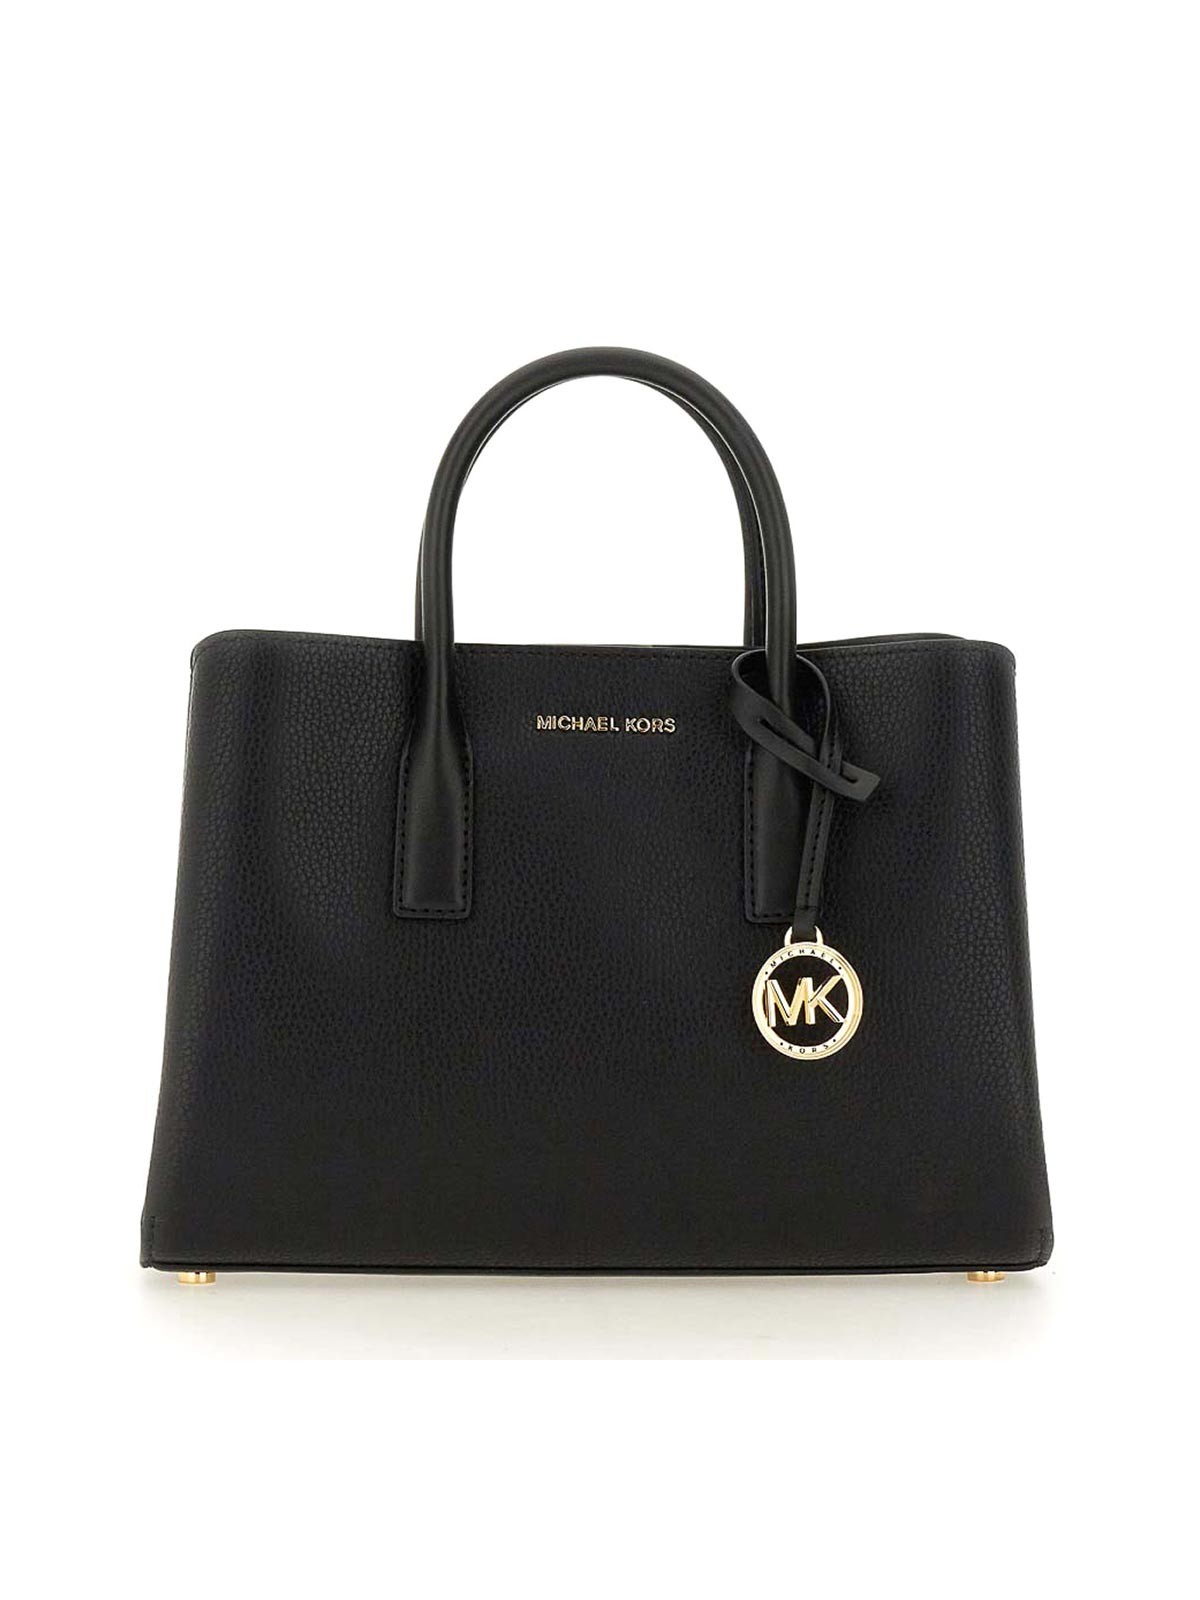 Michael Kors Ruthie Small Handbag In Black